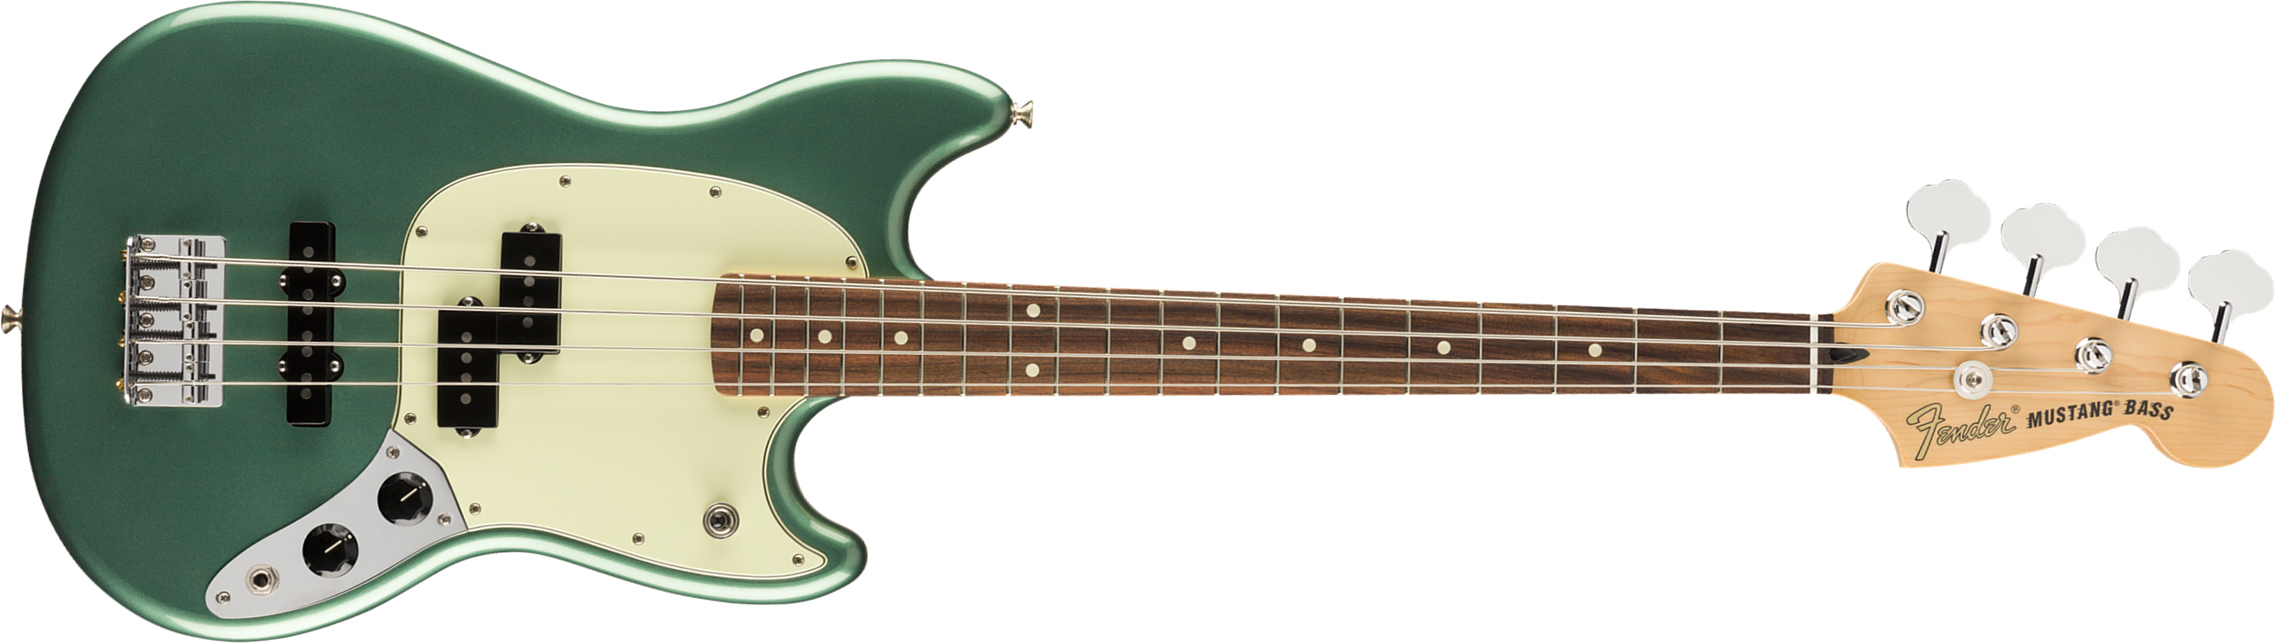 Fender Mustang Bass Pj Player Ltd Mex Pf - Sherwood Green Metallic - Basse Électrique Enfants - Main picture